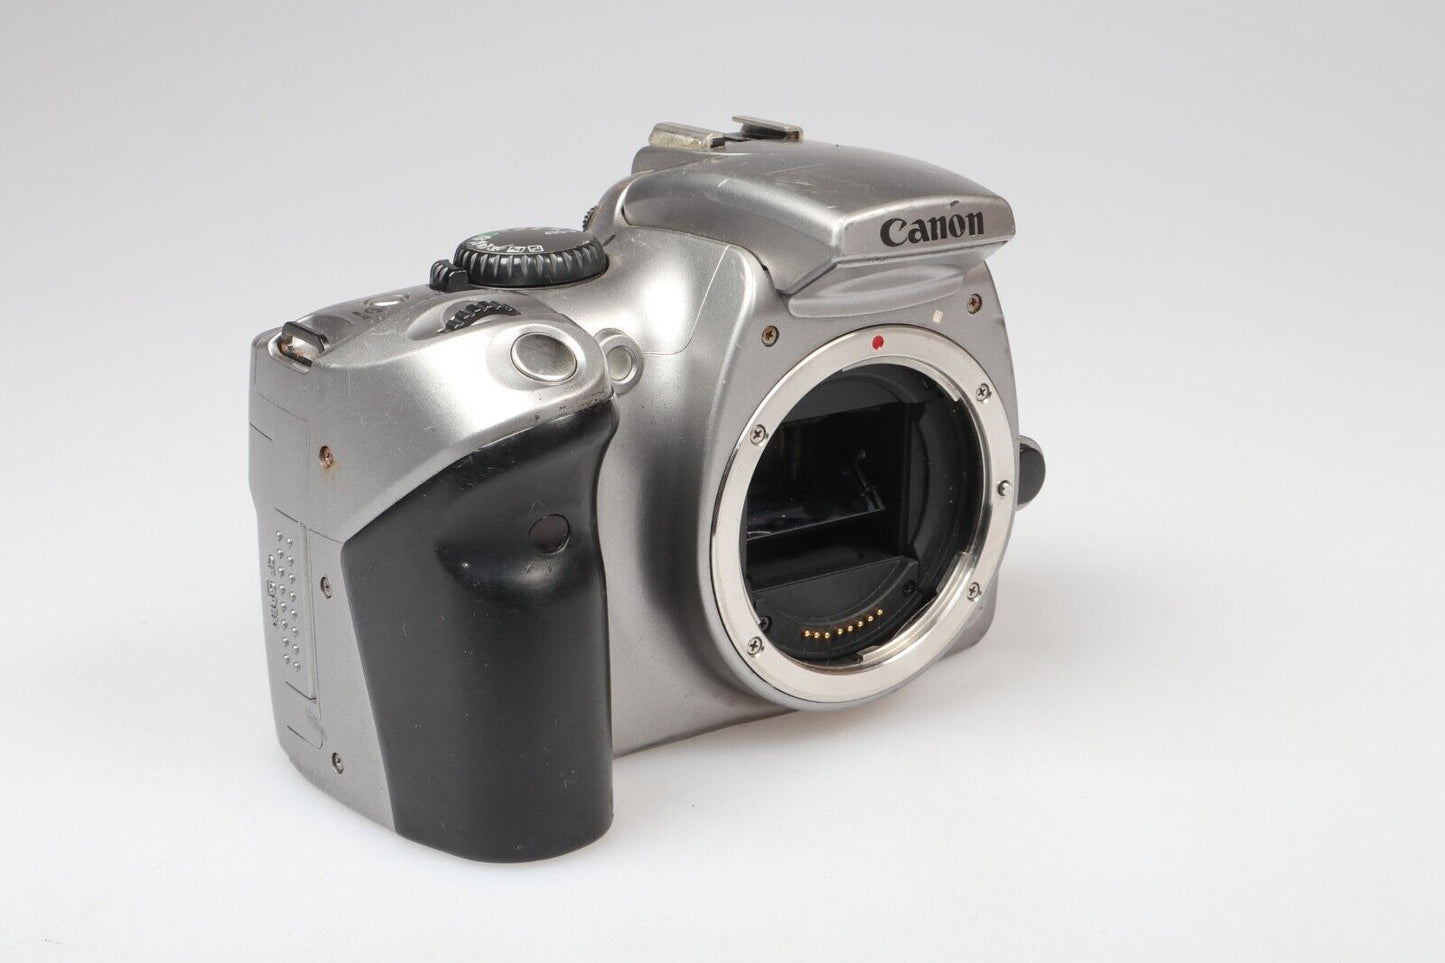 Canon EOS 300D | Digital SLR Camera | 6.3MP | Body Only | Silver